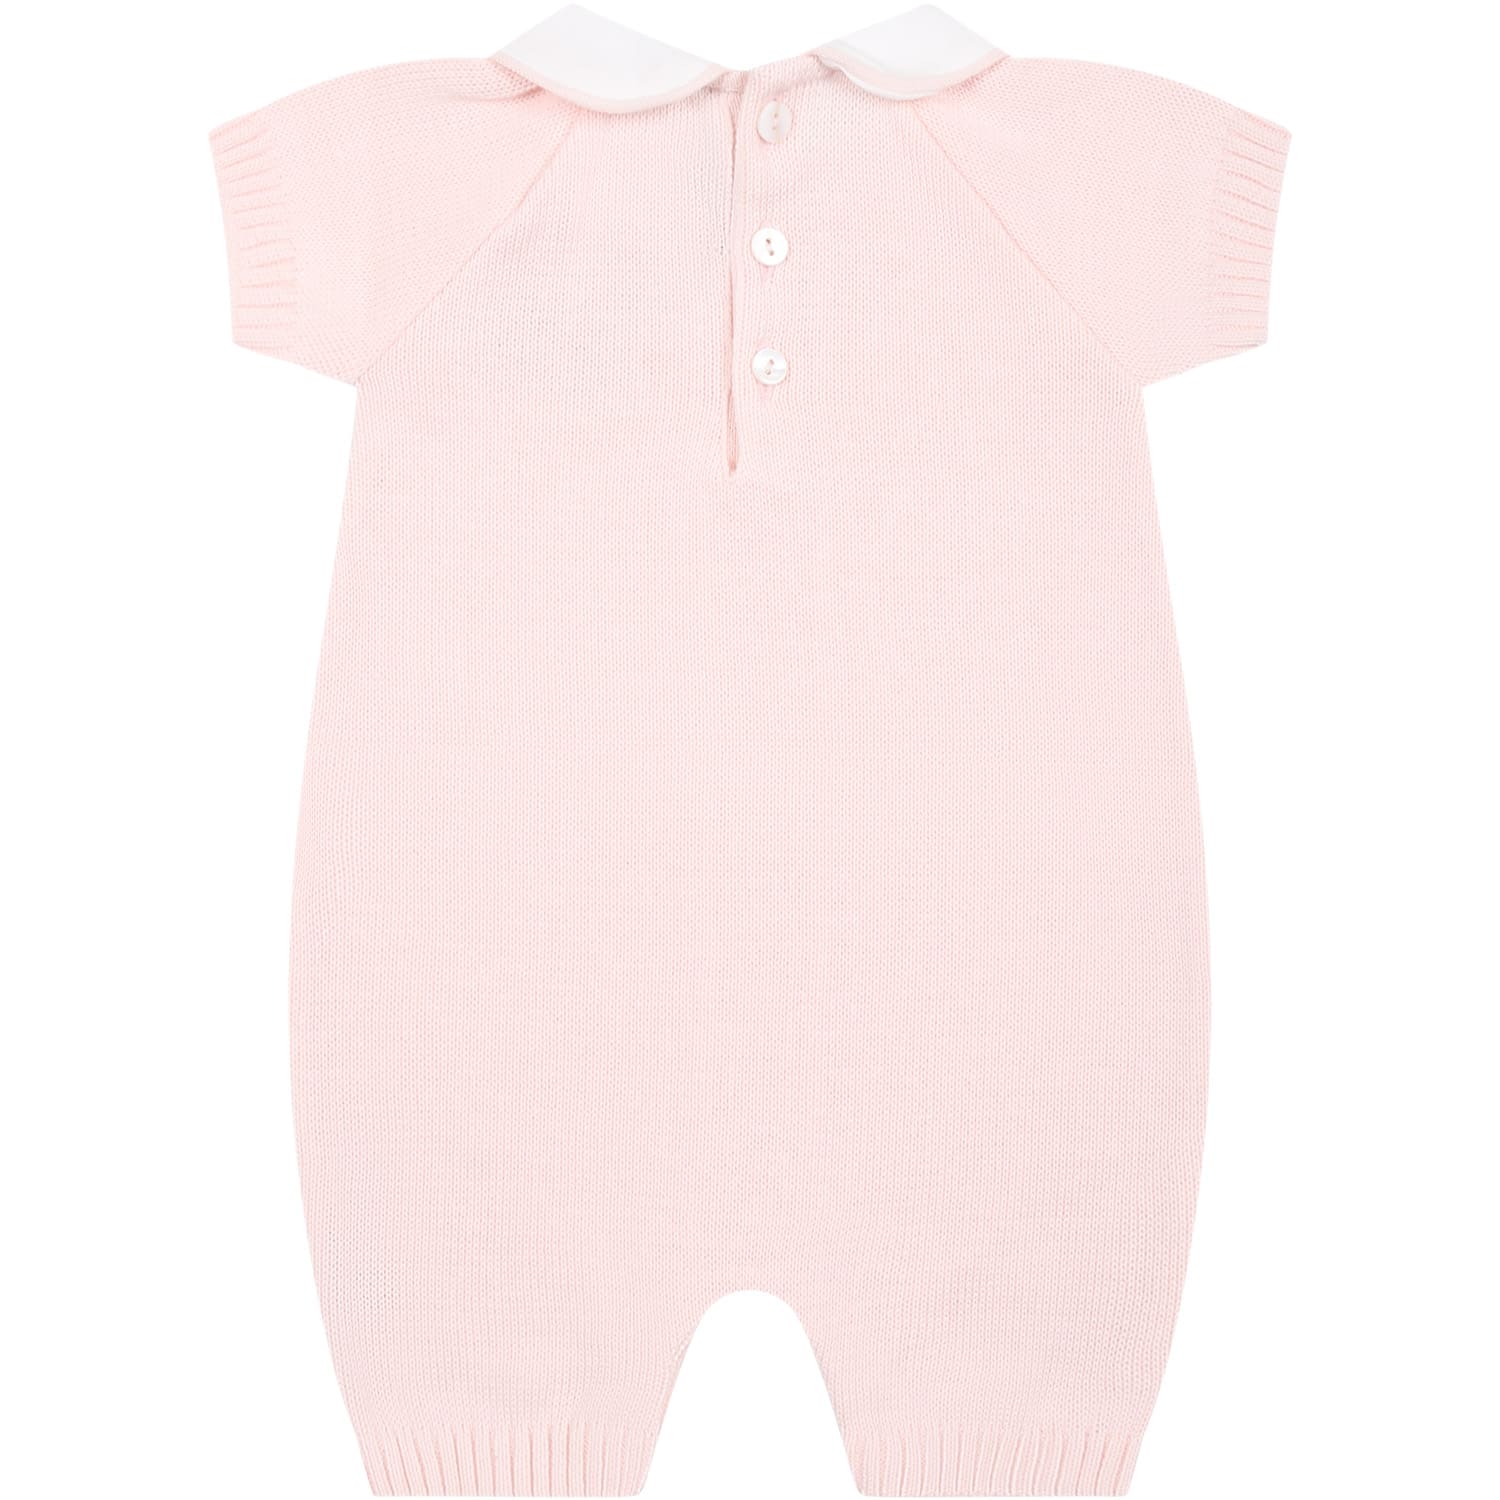 Shop Little Bear Pink Romper For Baby Girl